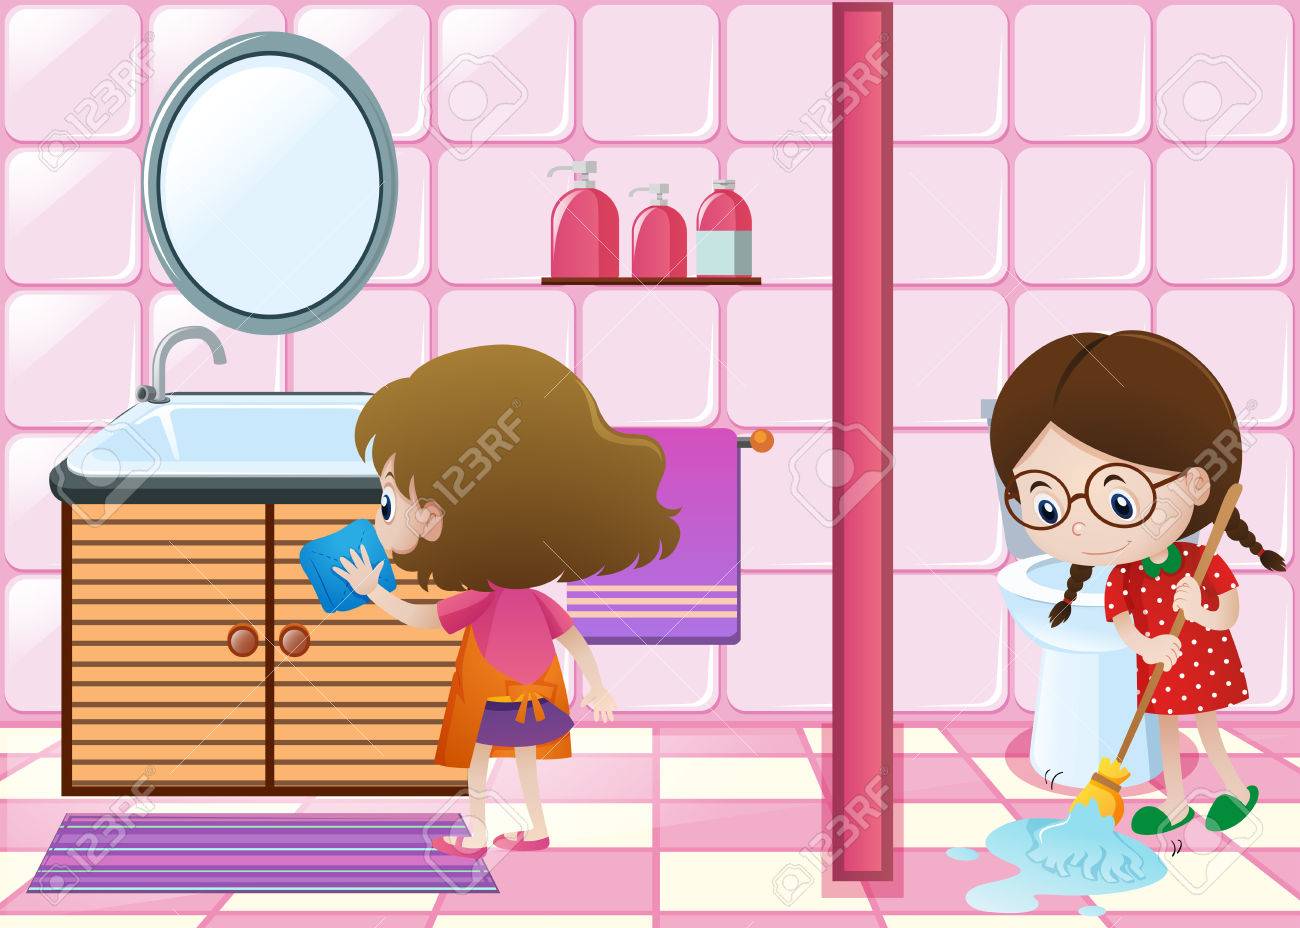 Two kids cleaning bathroom together illustration.